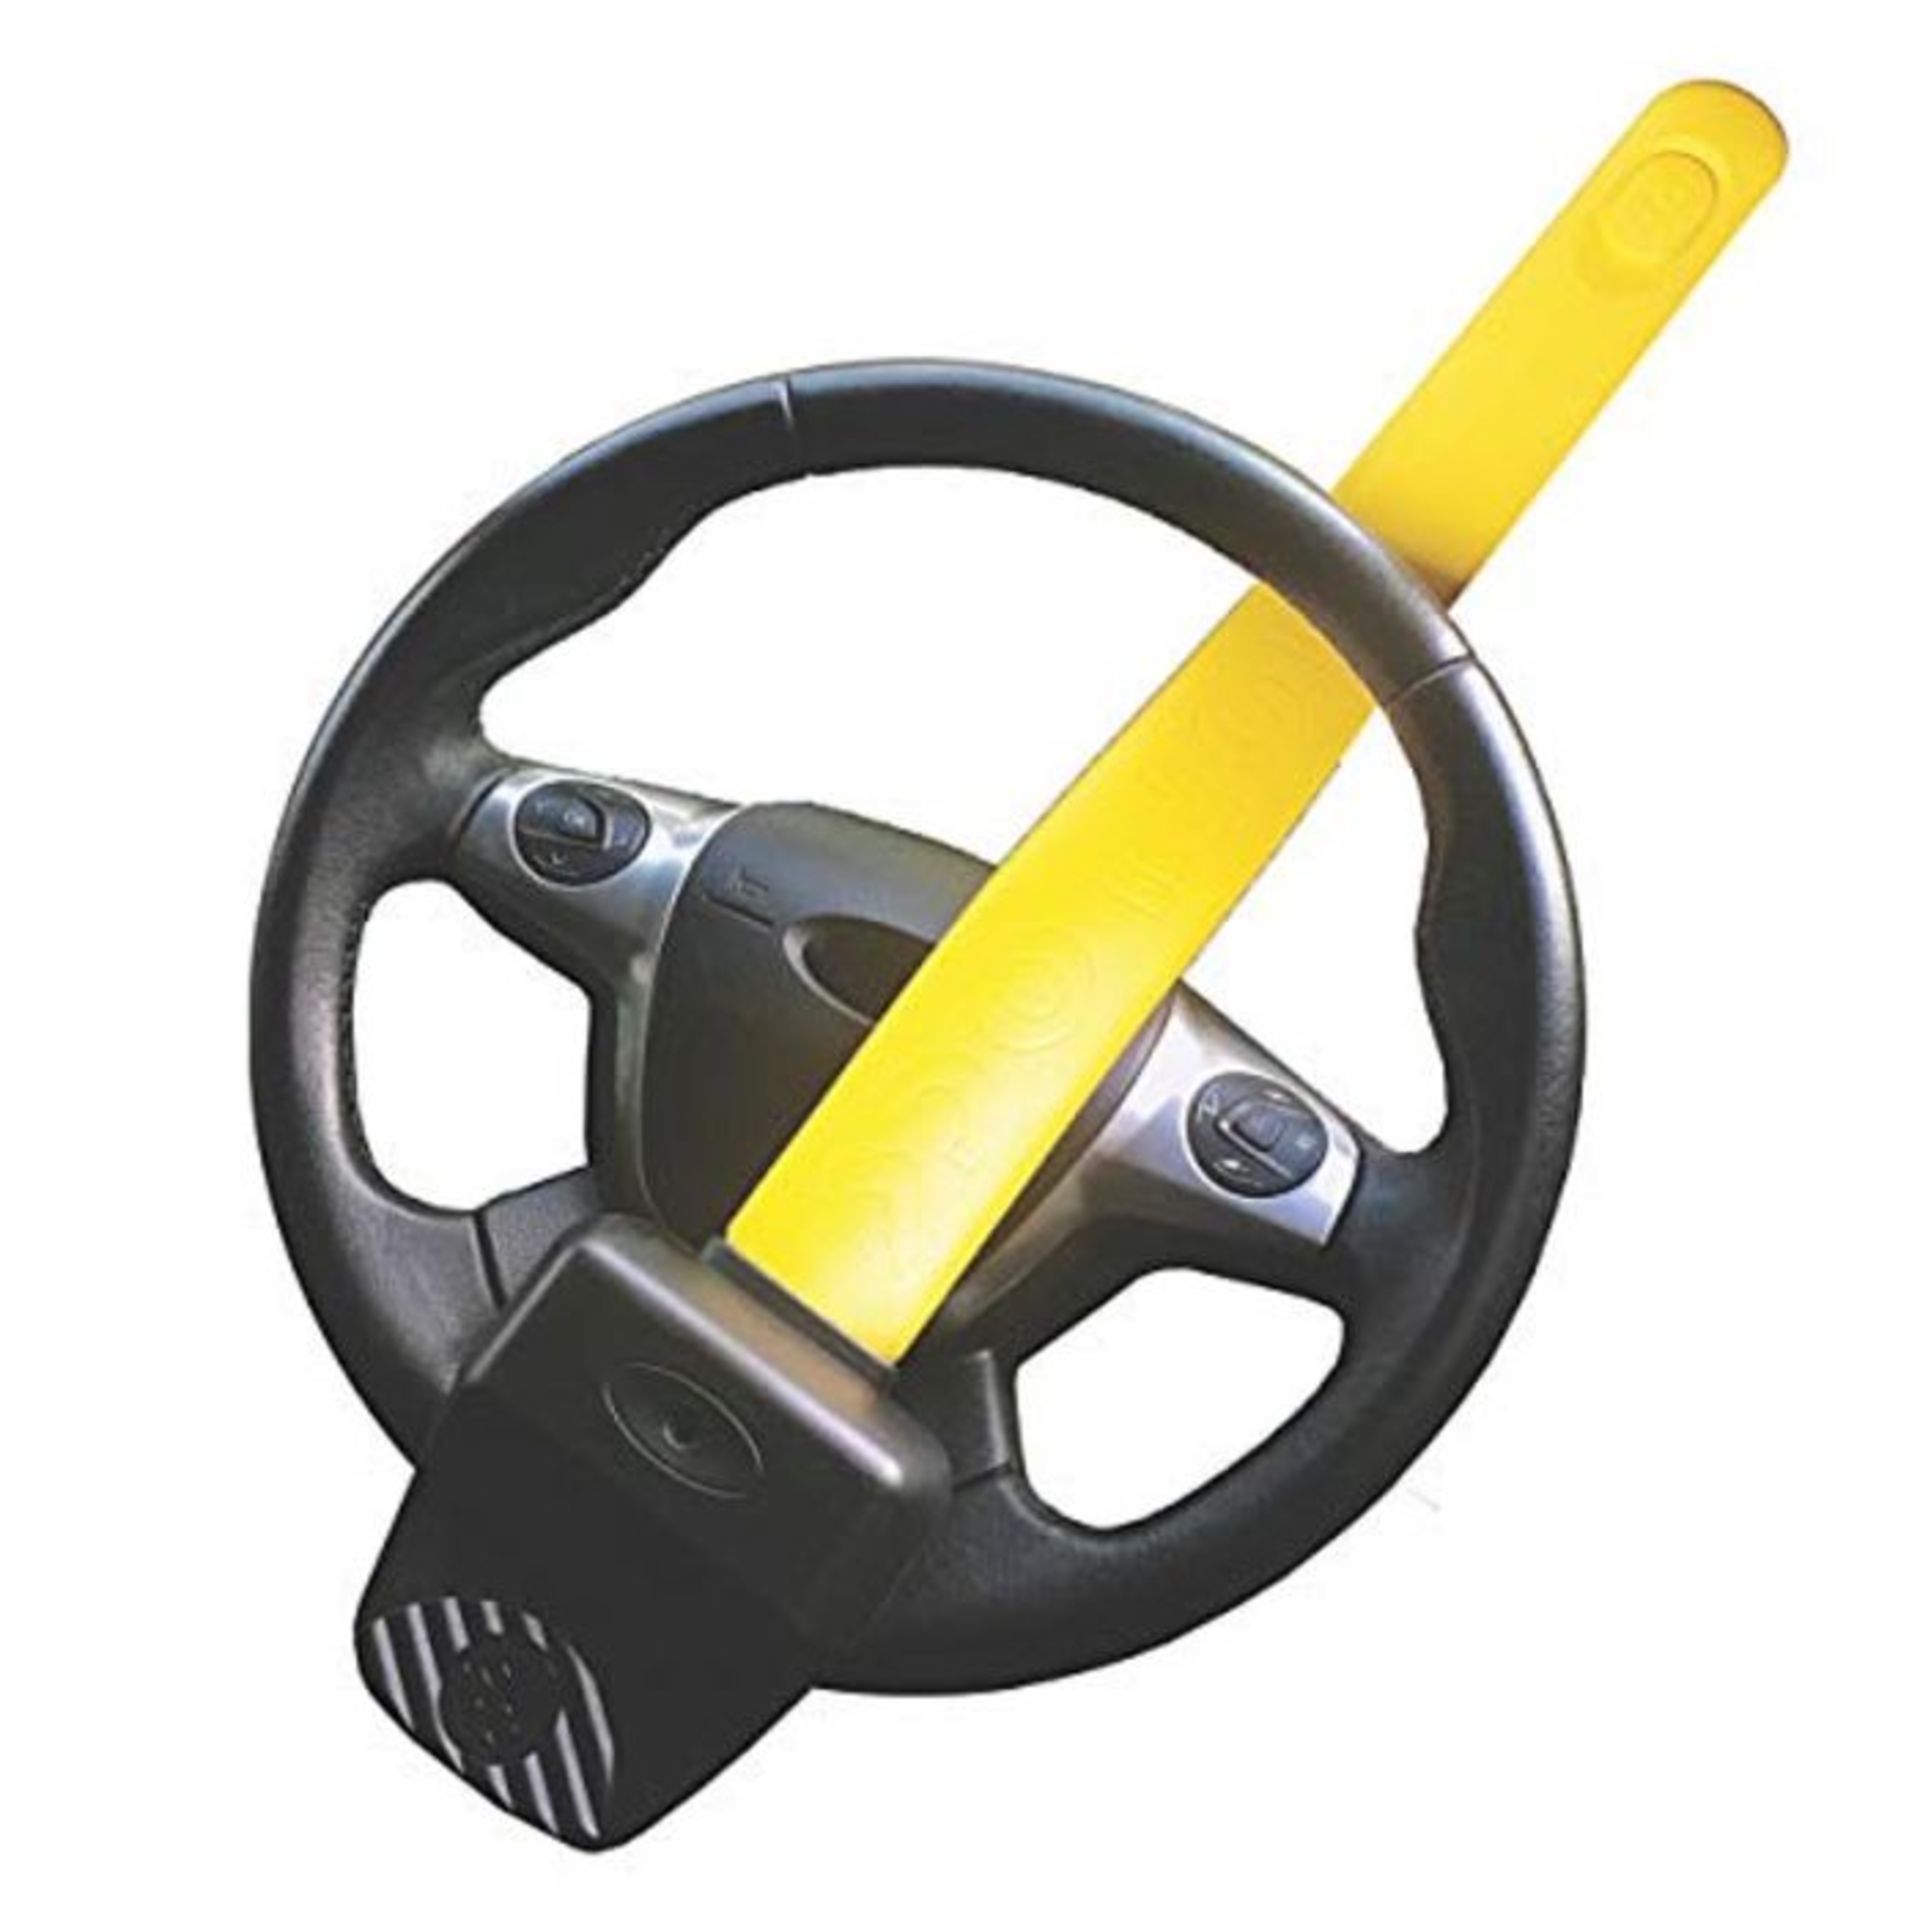 Stoplock 'Pro' Car Steering Wheel Lock W/Keys HG 149-00 - Anti-Theft Security Device -